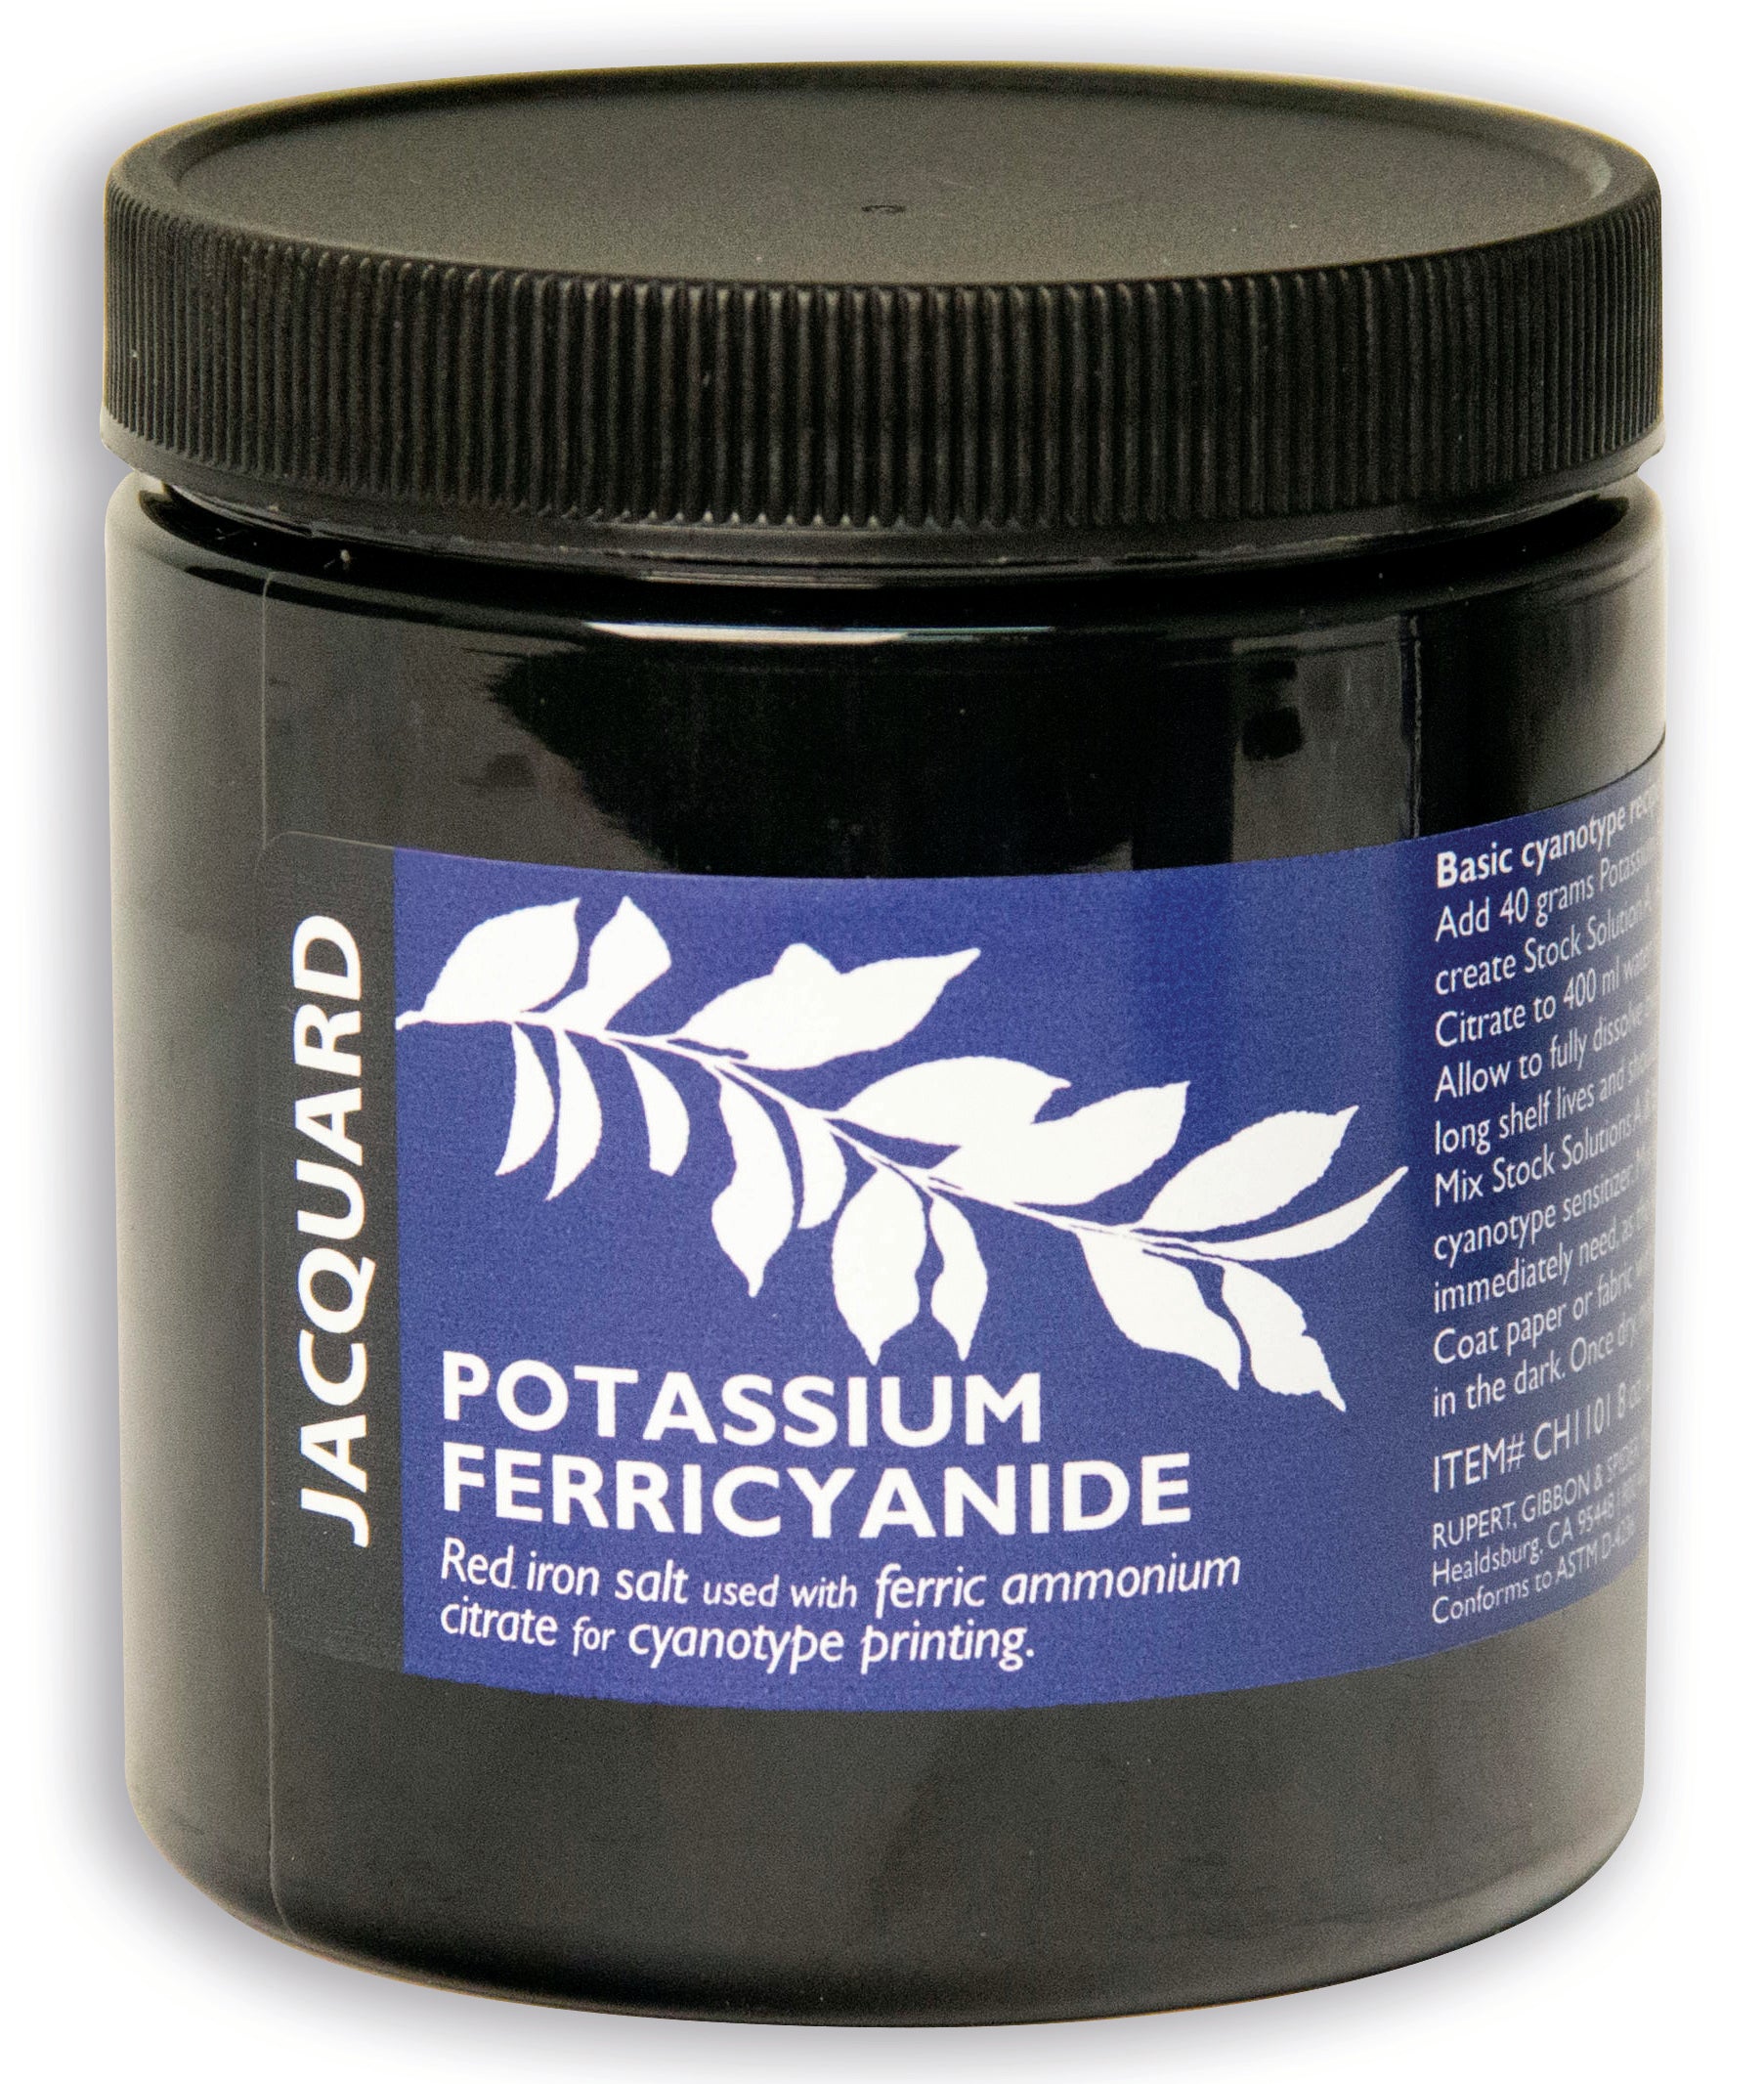 Cyanotype Chemistry - Potassium Ferricyanide